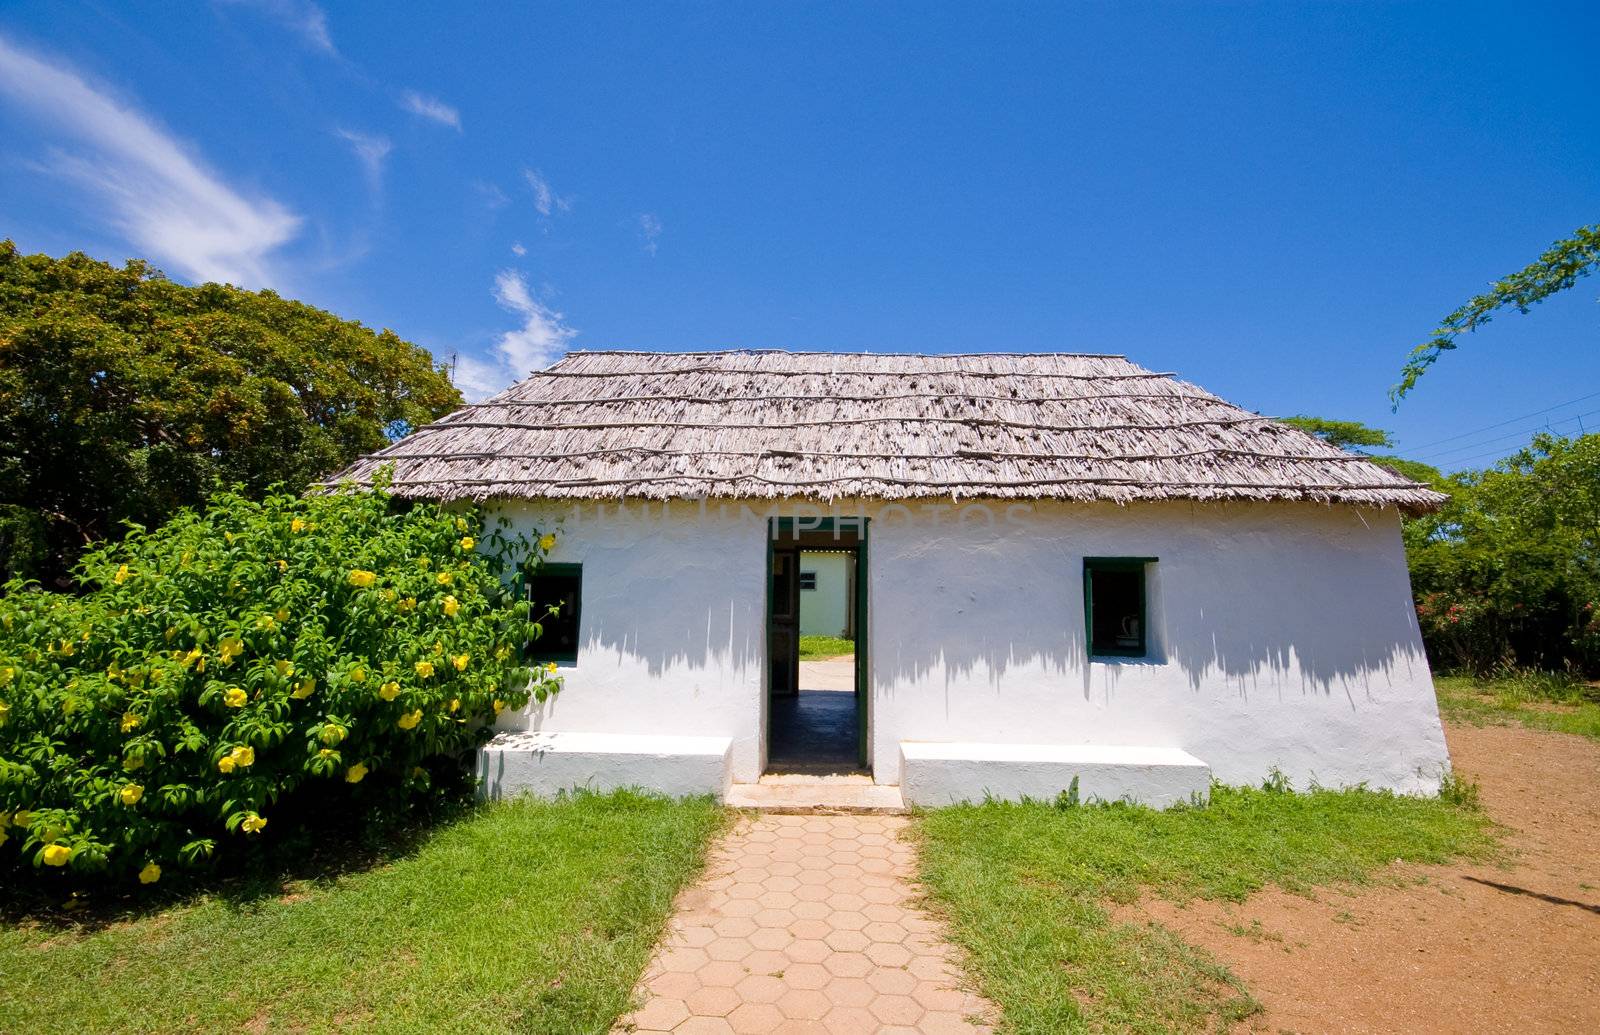 ancient slave house on curacao cas di palhi mashi
